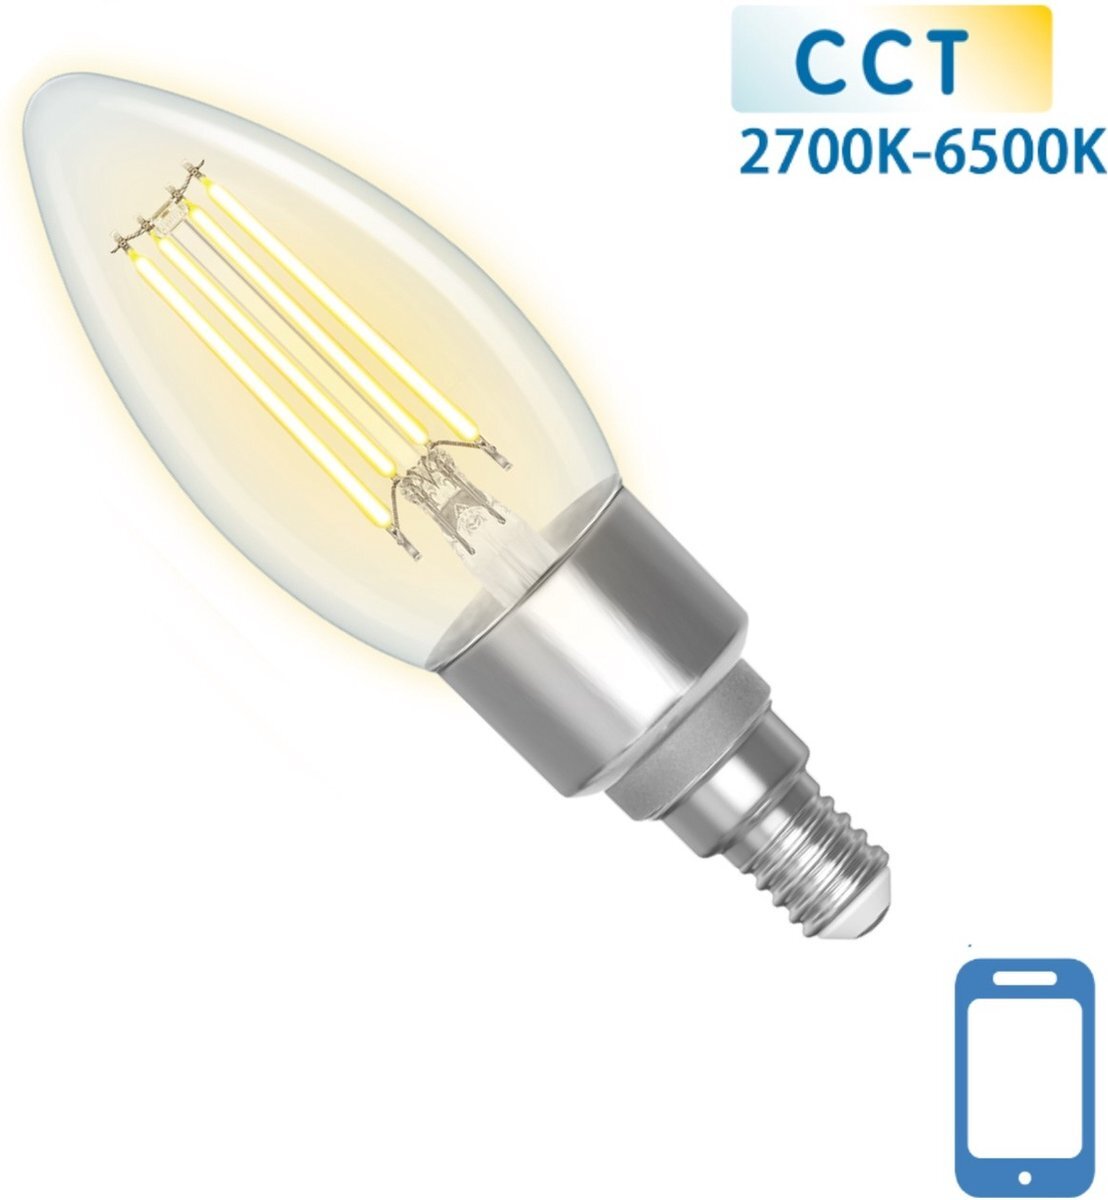 Aigostar Kaarslamp E14 4.5W WiFi + Bluetooth CCT 2700K-6500K | Smartlamp C35 - warmwit - daglichtwit filament LED ~ 470 Lumen - helder glas - 230 Volt